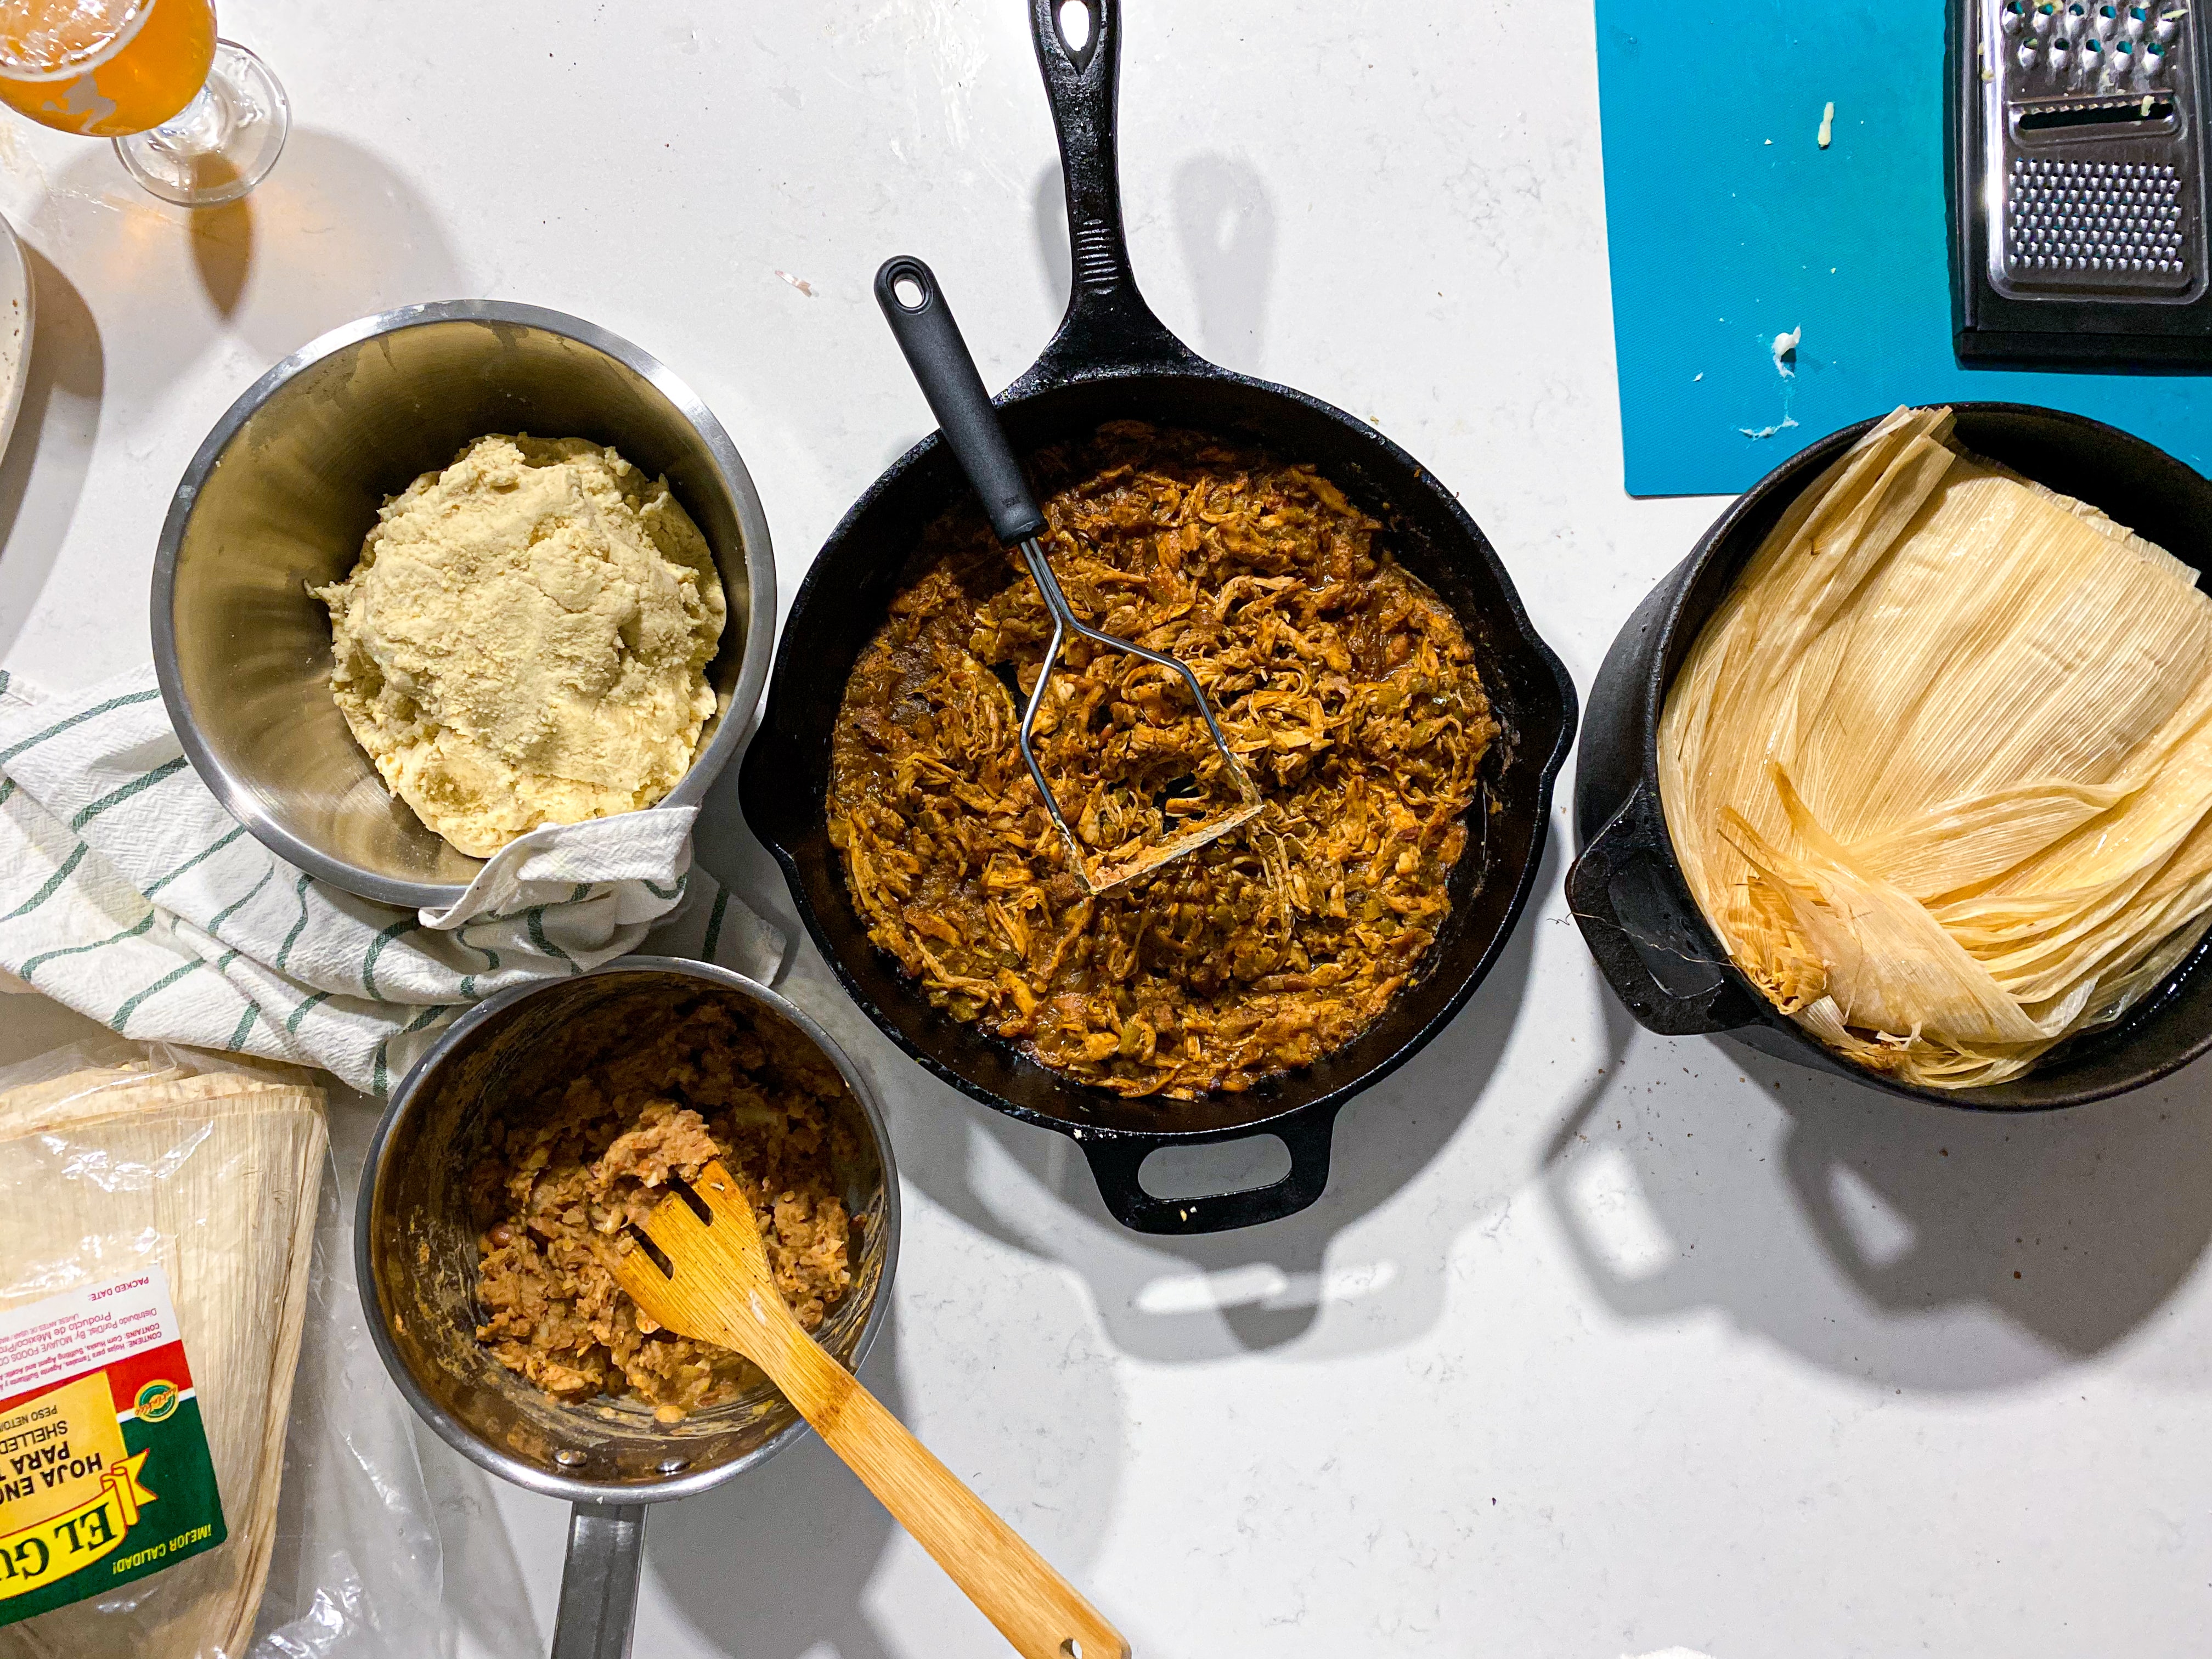 ingredients for tamales